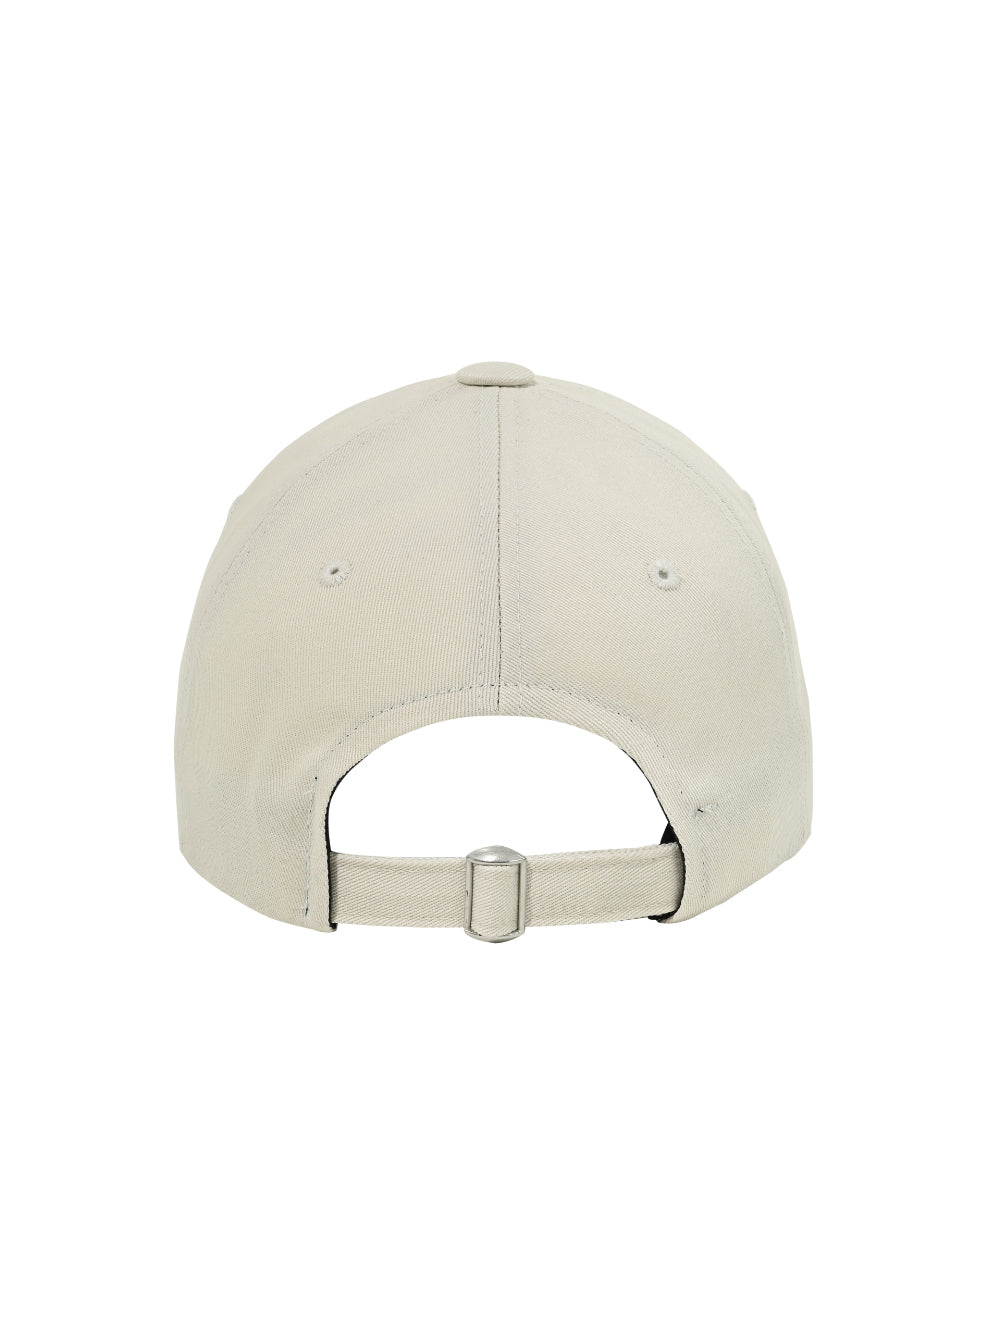 MUCENT BALL CAP (Cream)